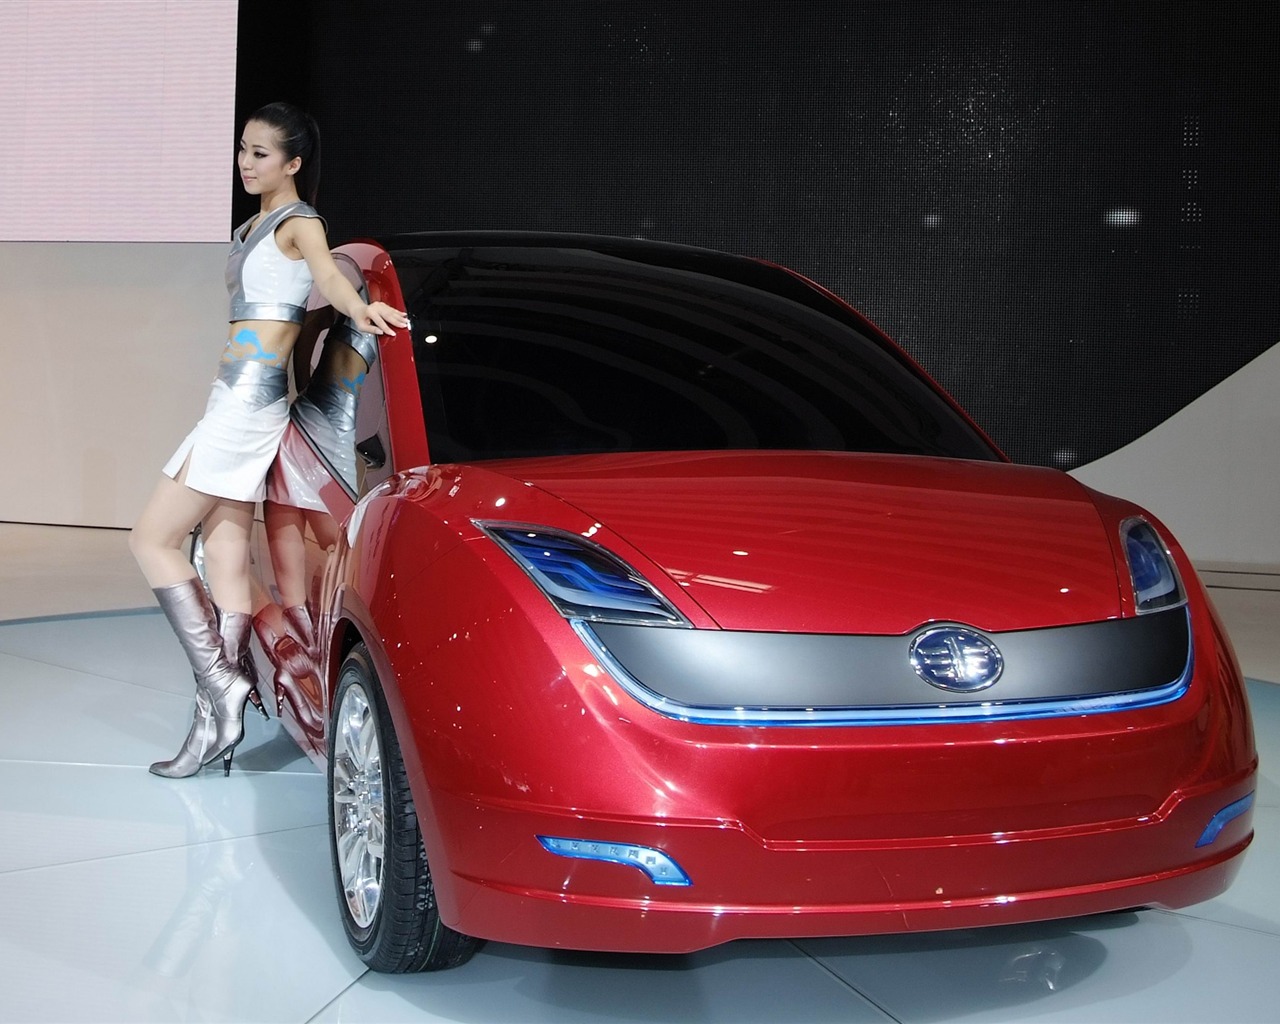 2010 Salón Internacional del Automóvil de Beijing Heung Che belleza (obras barras de refuerzo) #24 - 1280x1024